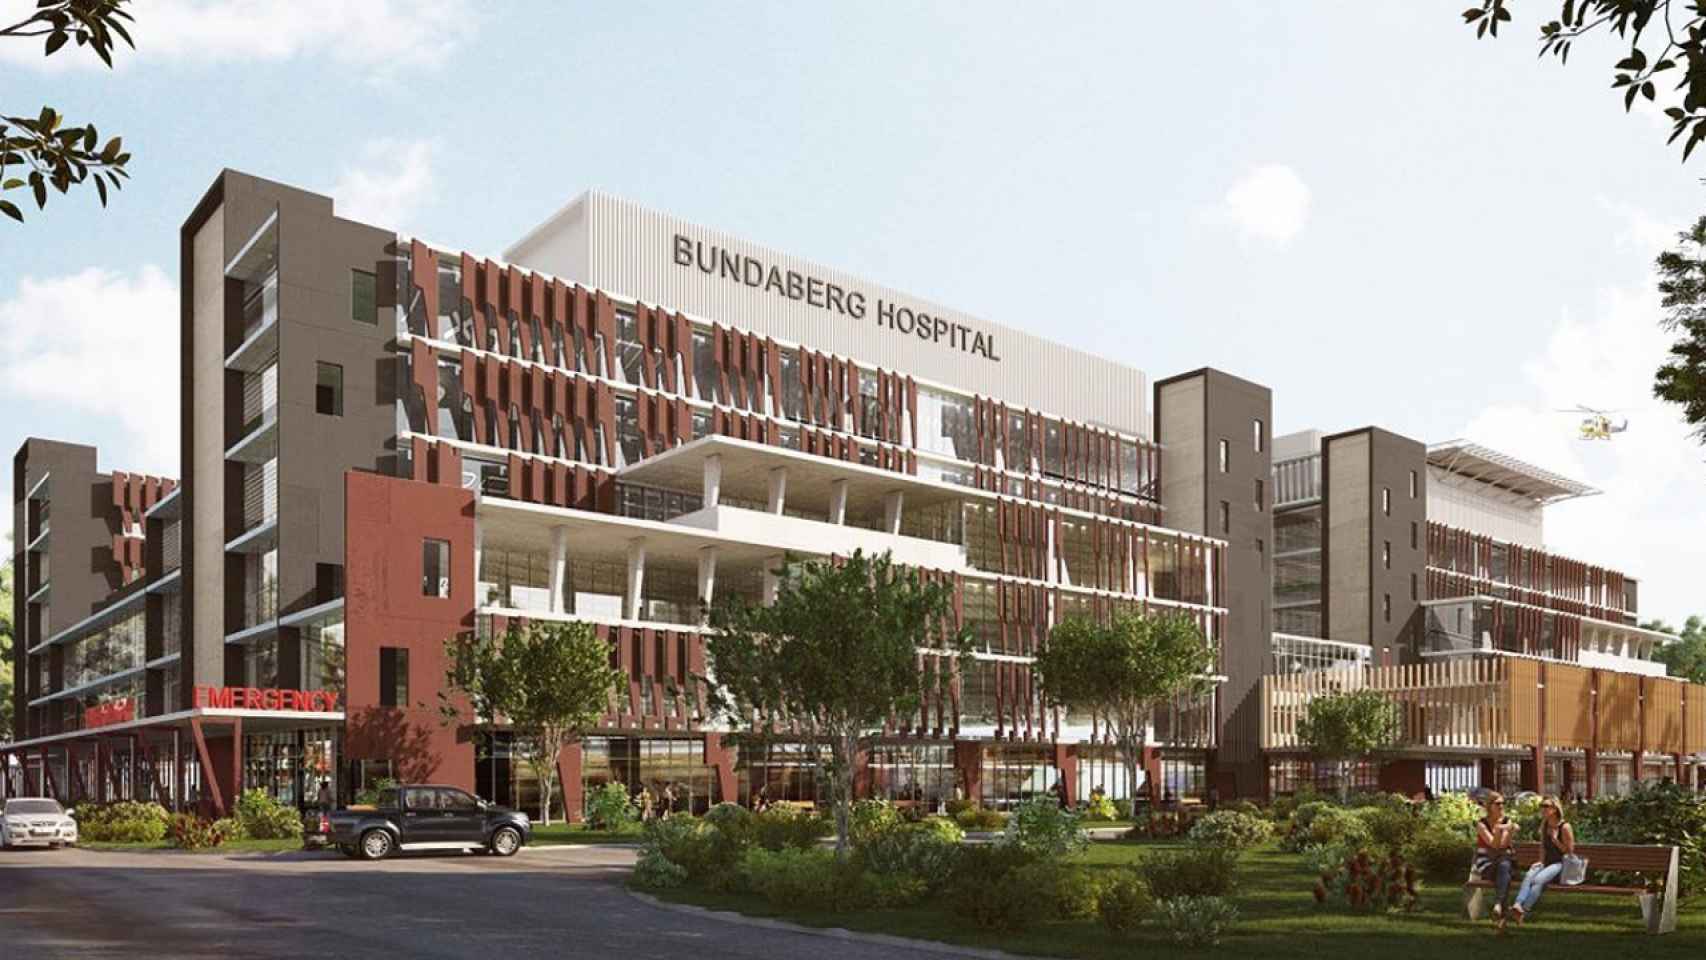 CPB Contractors, filial de CIMIC, construirá el Hospital Bundaberg